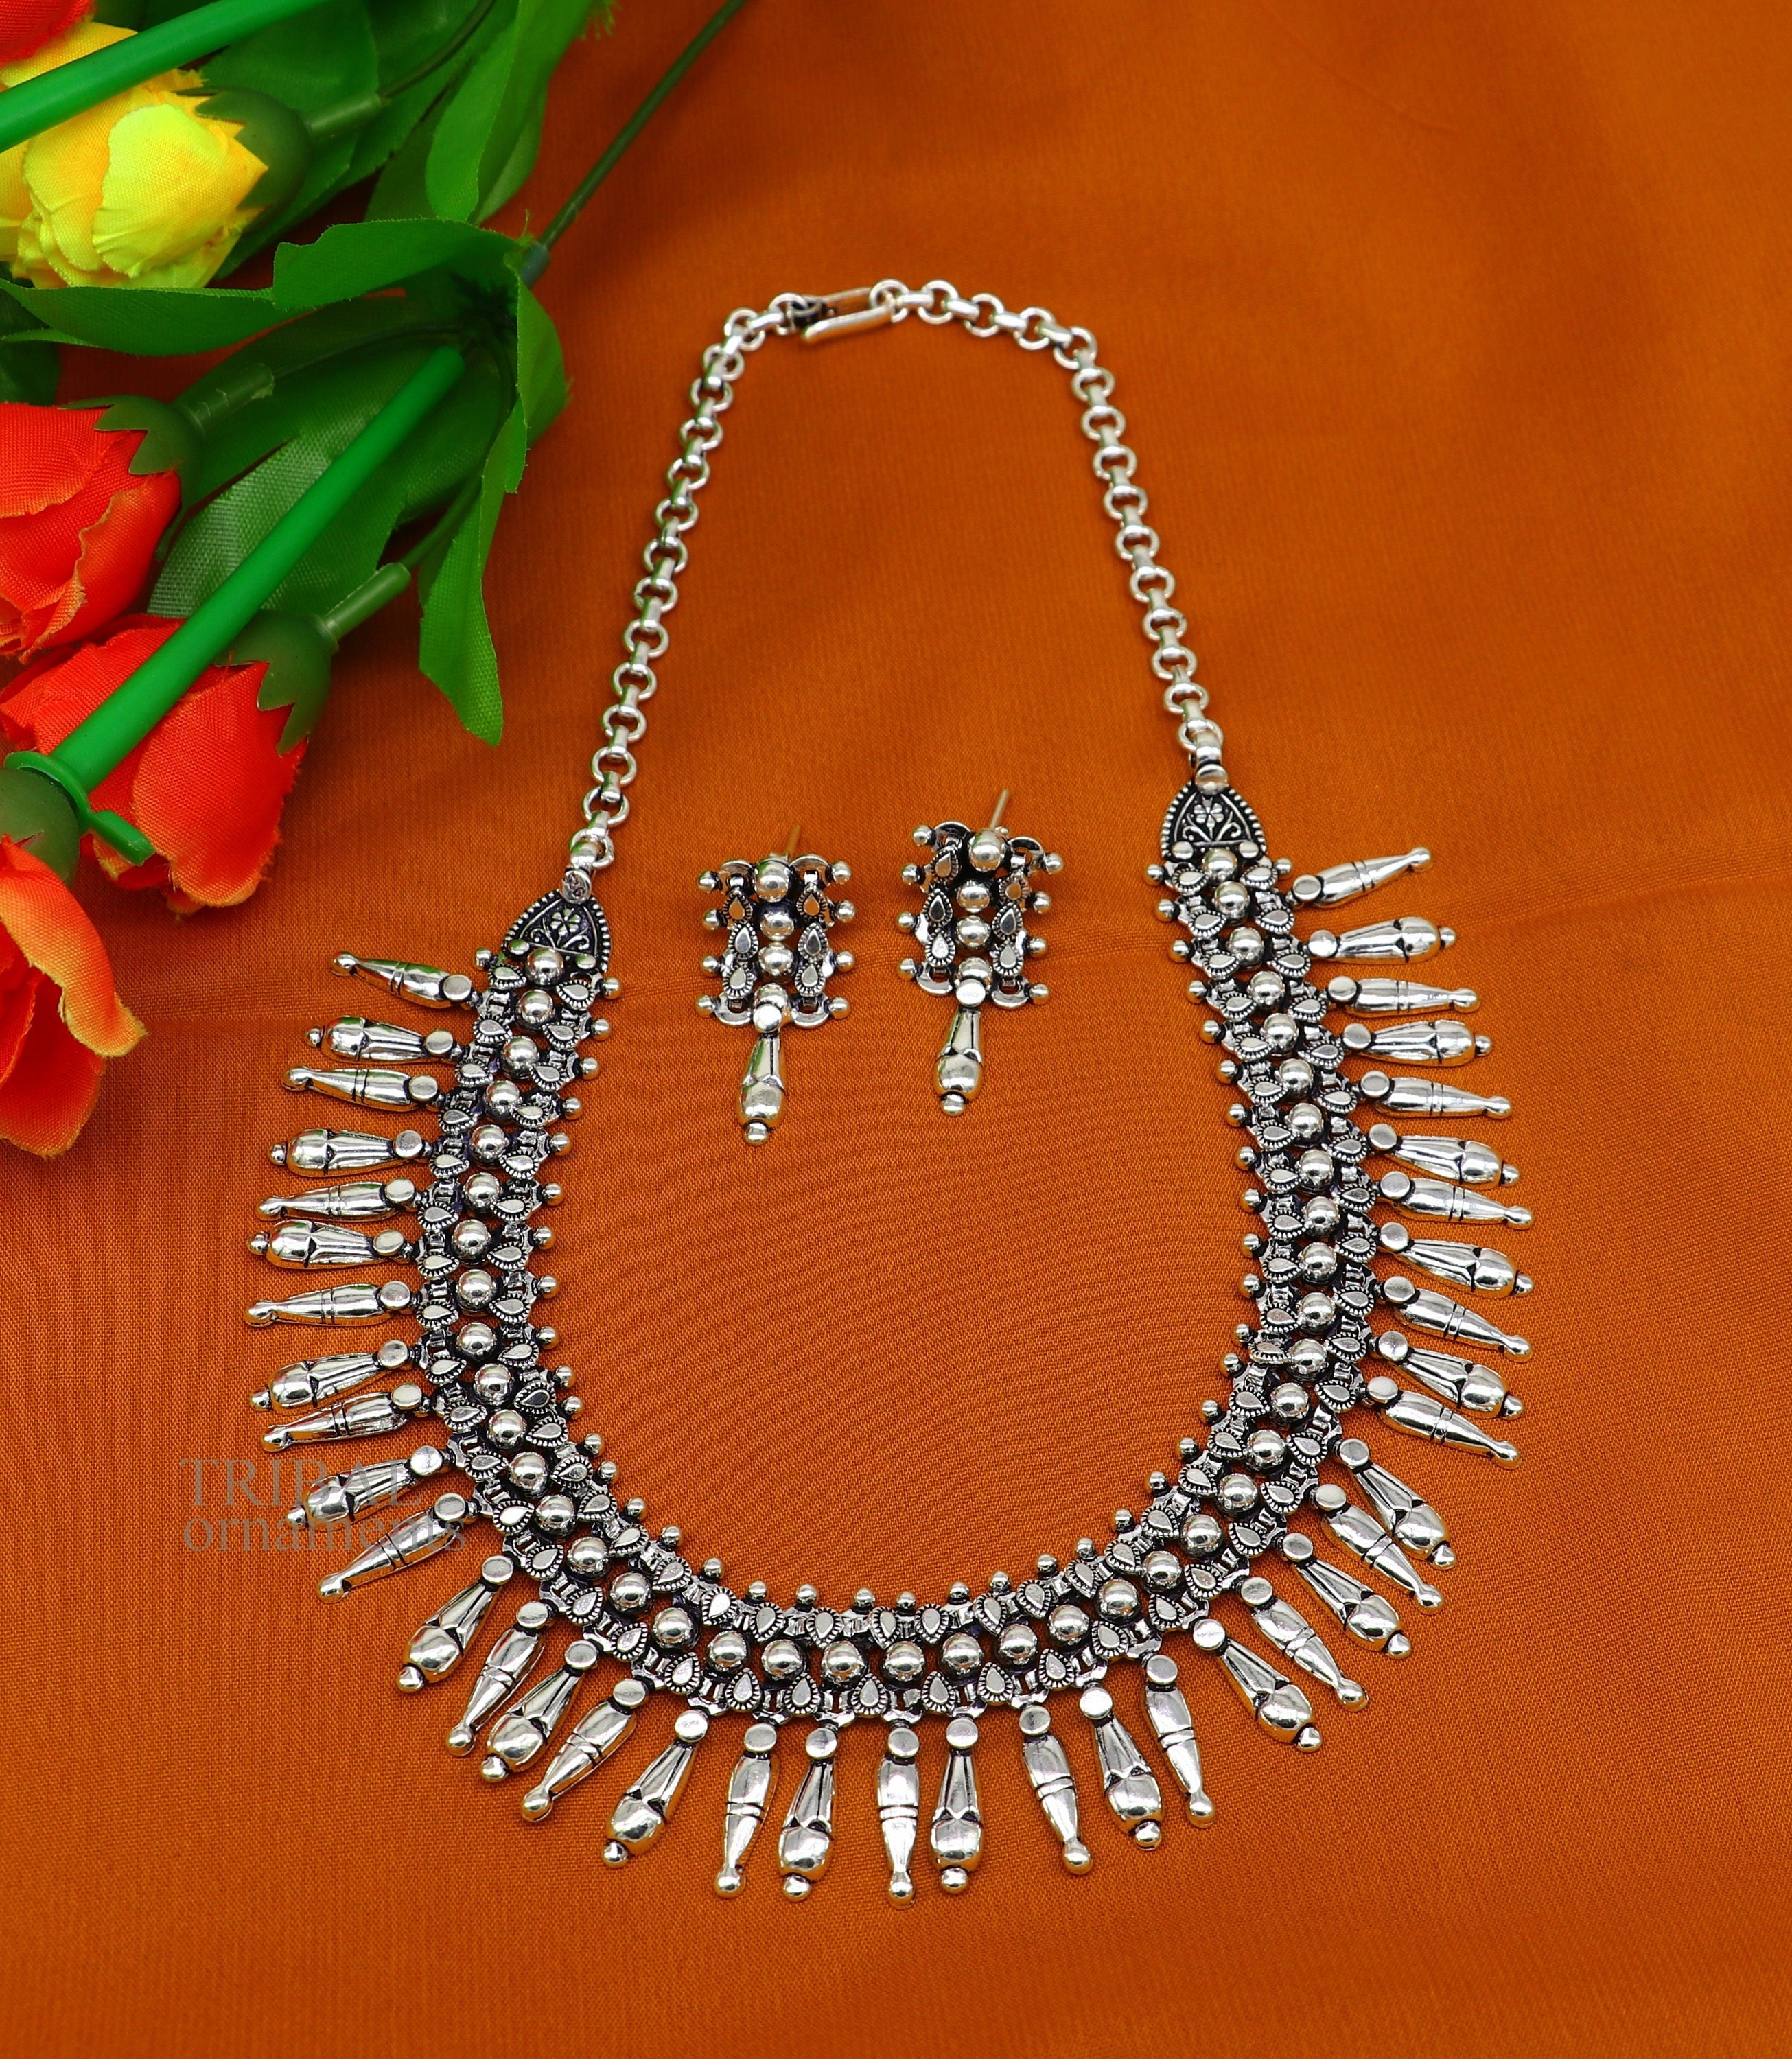 PANASH Antique Silver Elegant Choker Necklace for Women and Girls - EASYCART